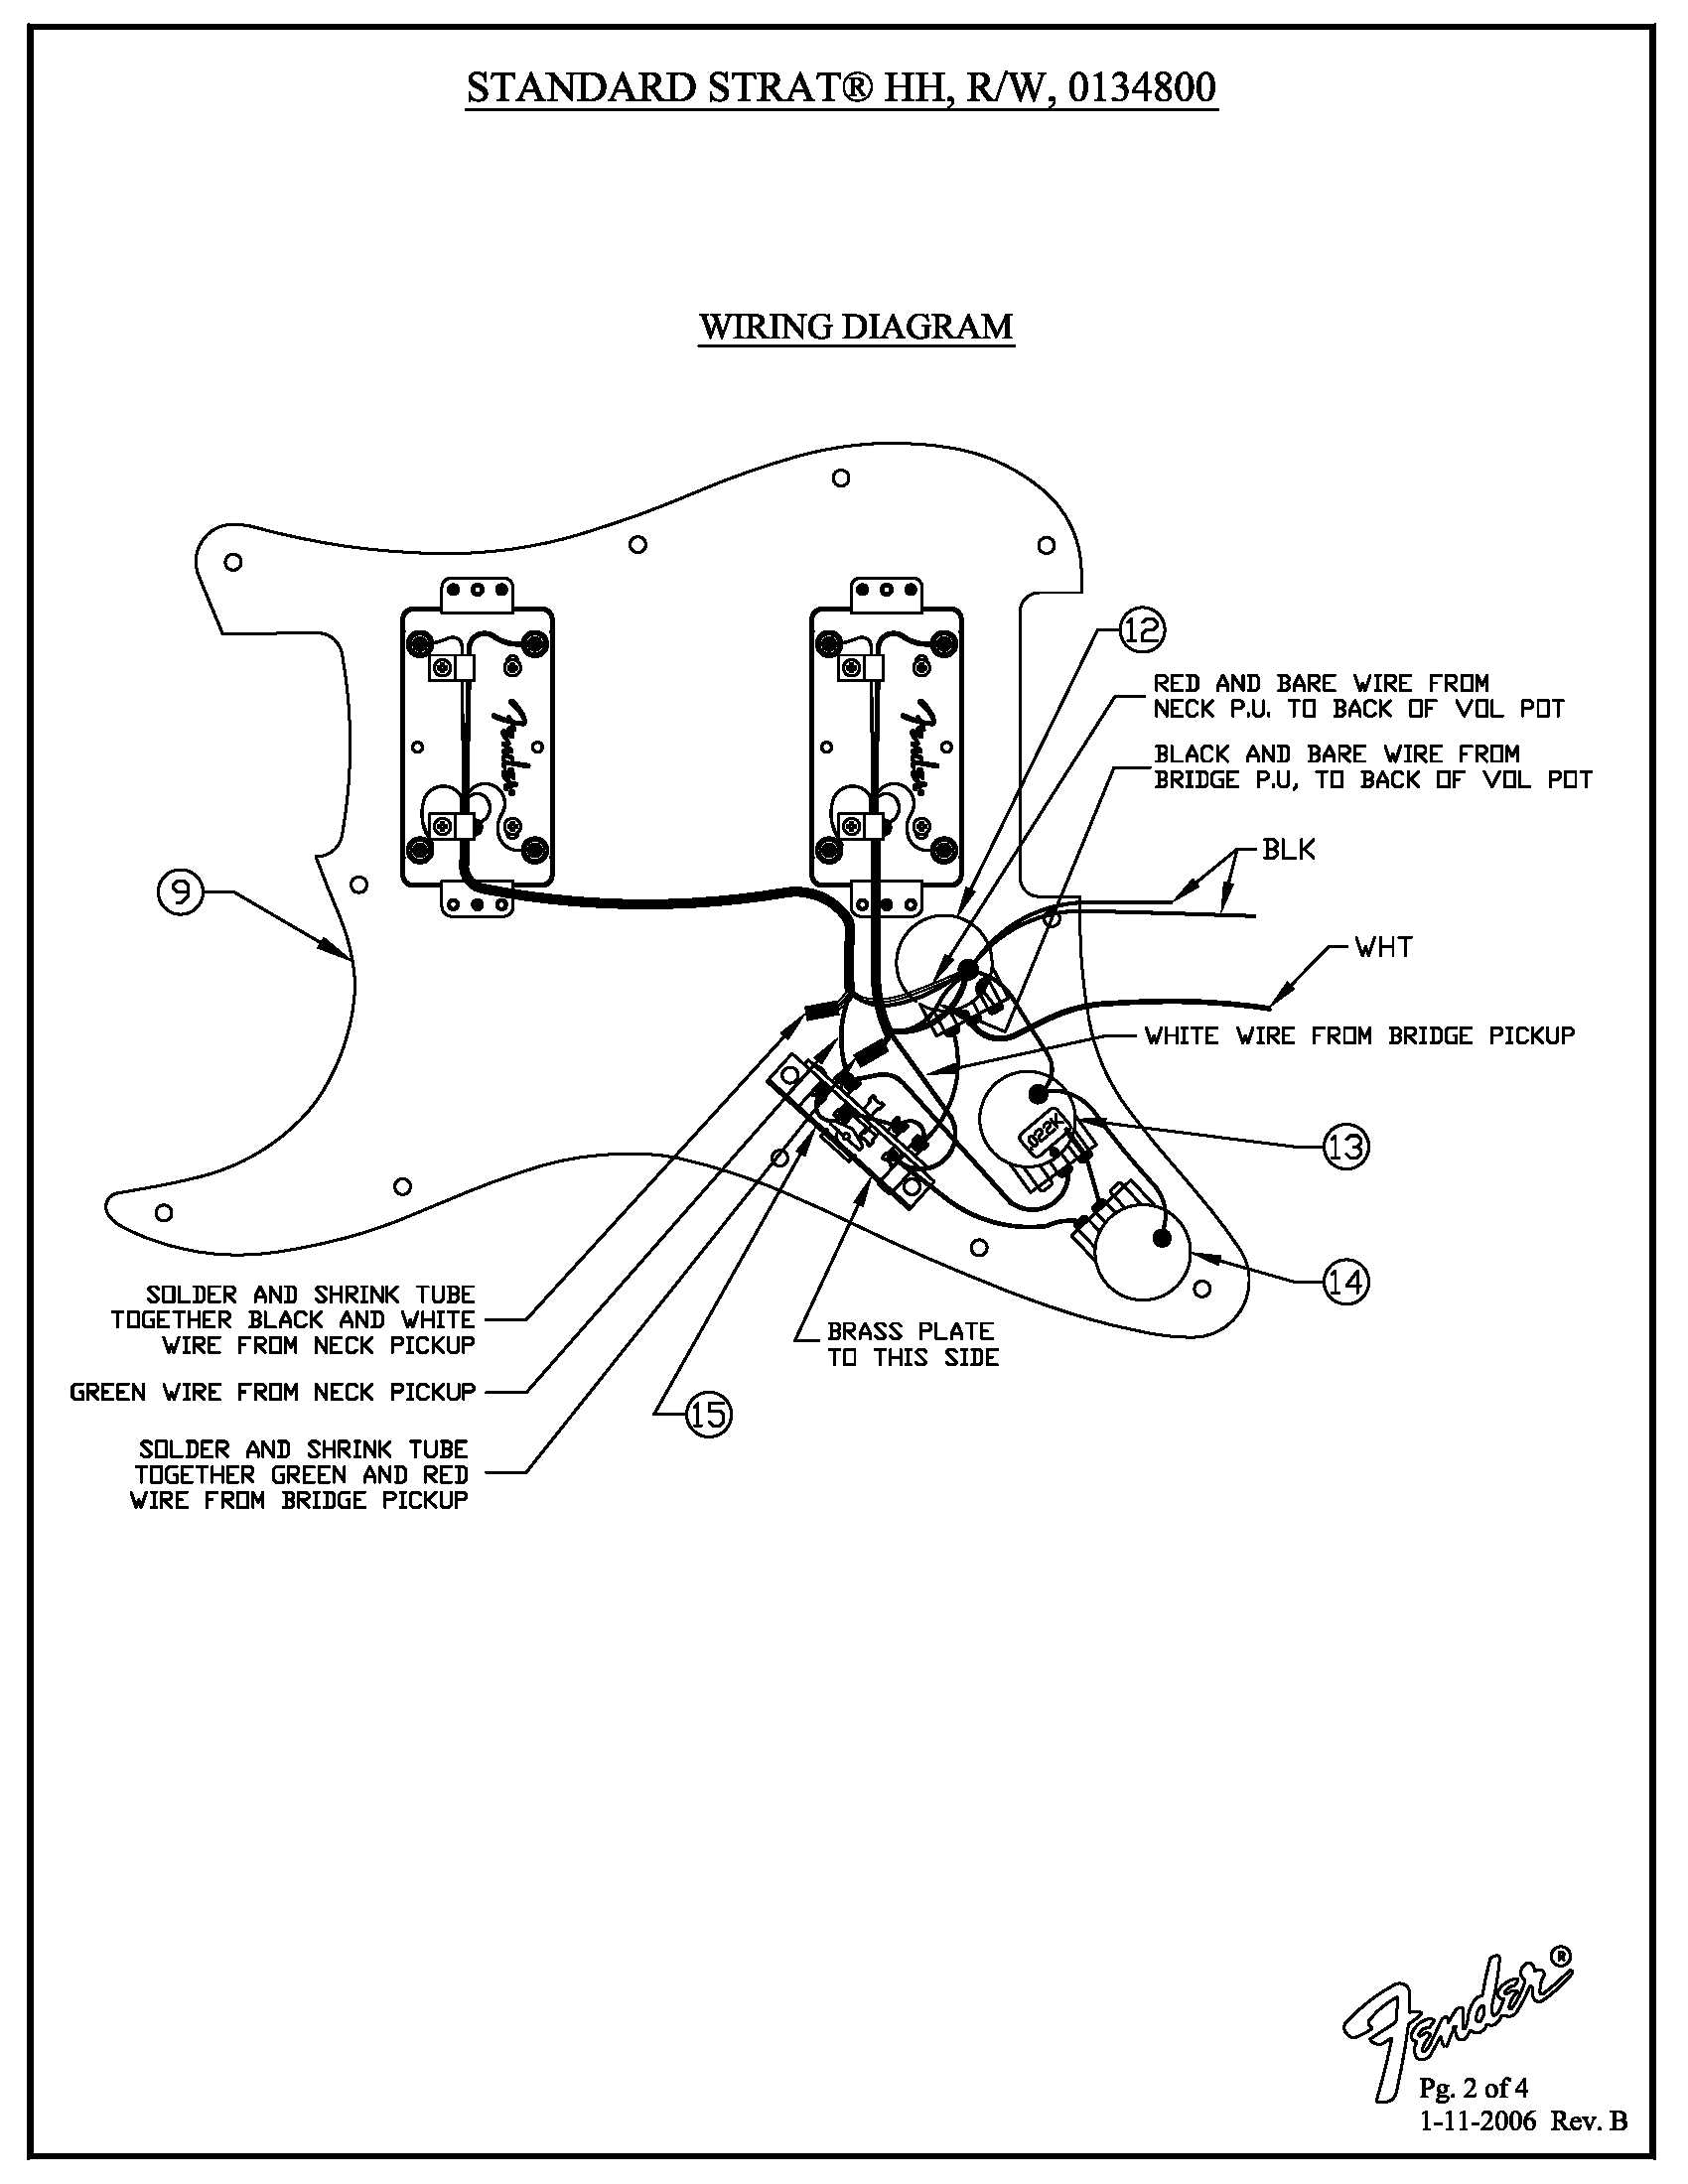 Standard Stratocaster HH Wiring Diagram 0134800 · Customer Self-Service